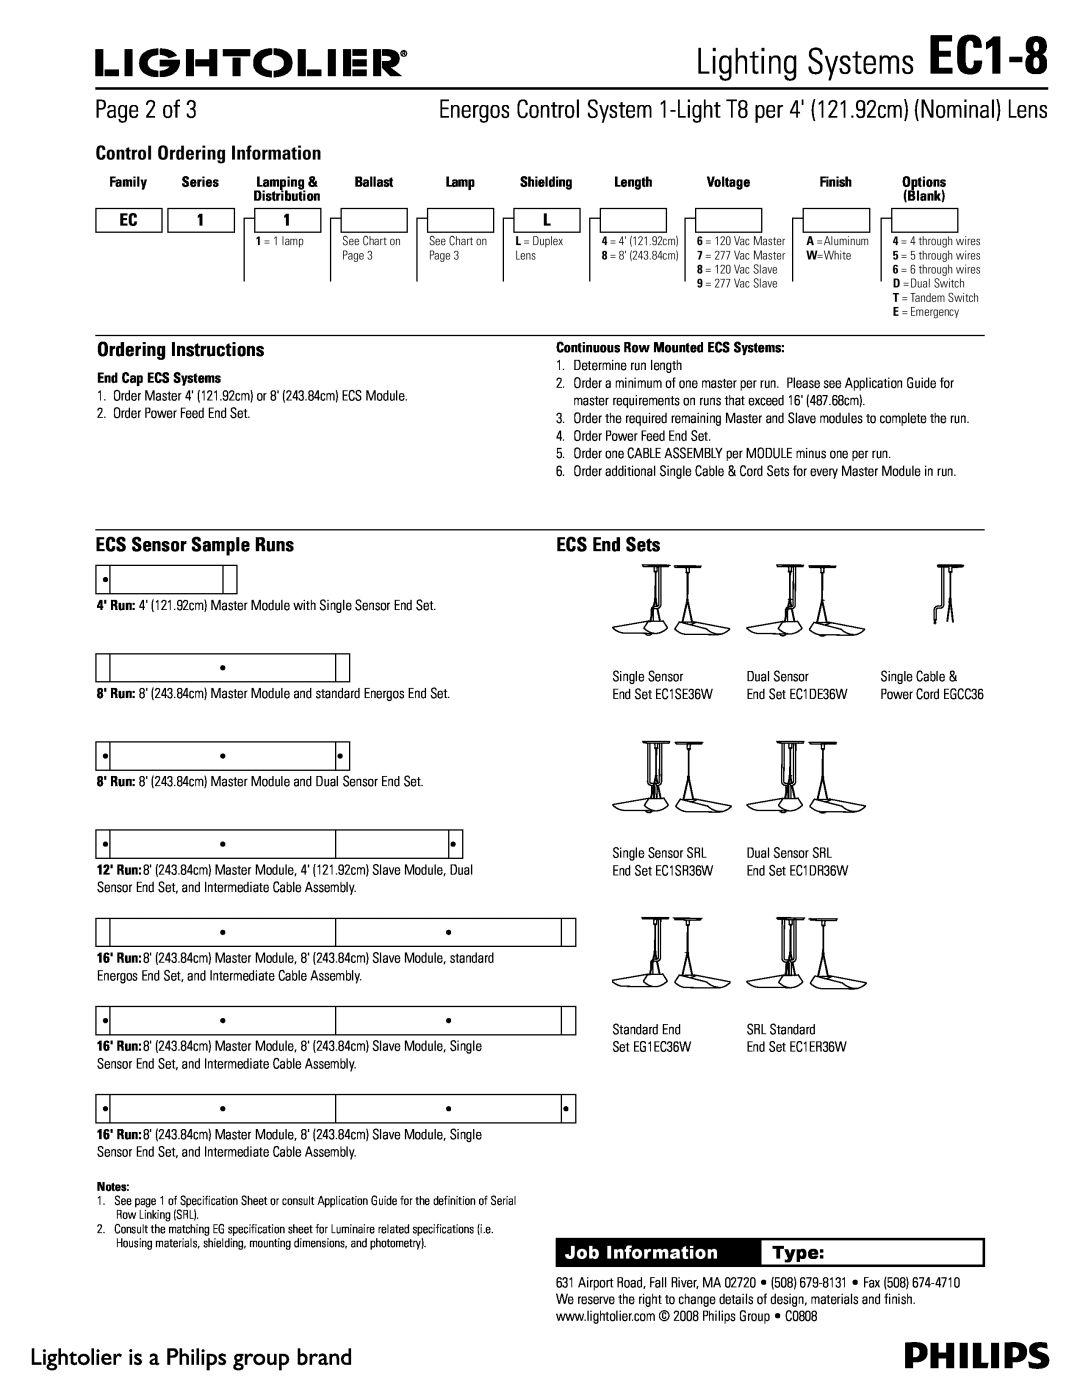 Lightolier EC1-8 Page 2 of, Control Ordering Information, Ordering Instructions, ECS Sensor Sample Runs, Type 